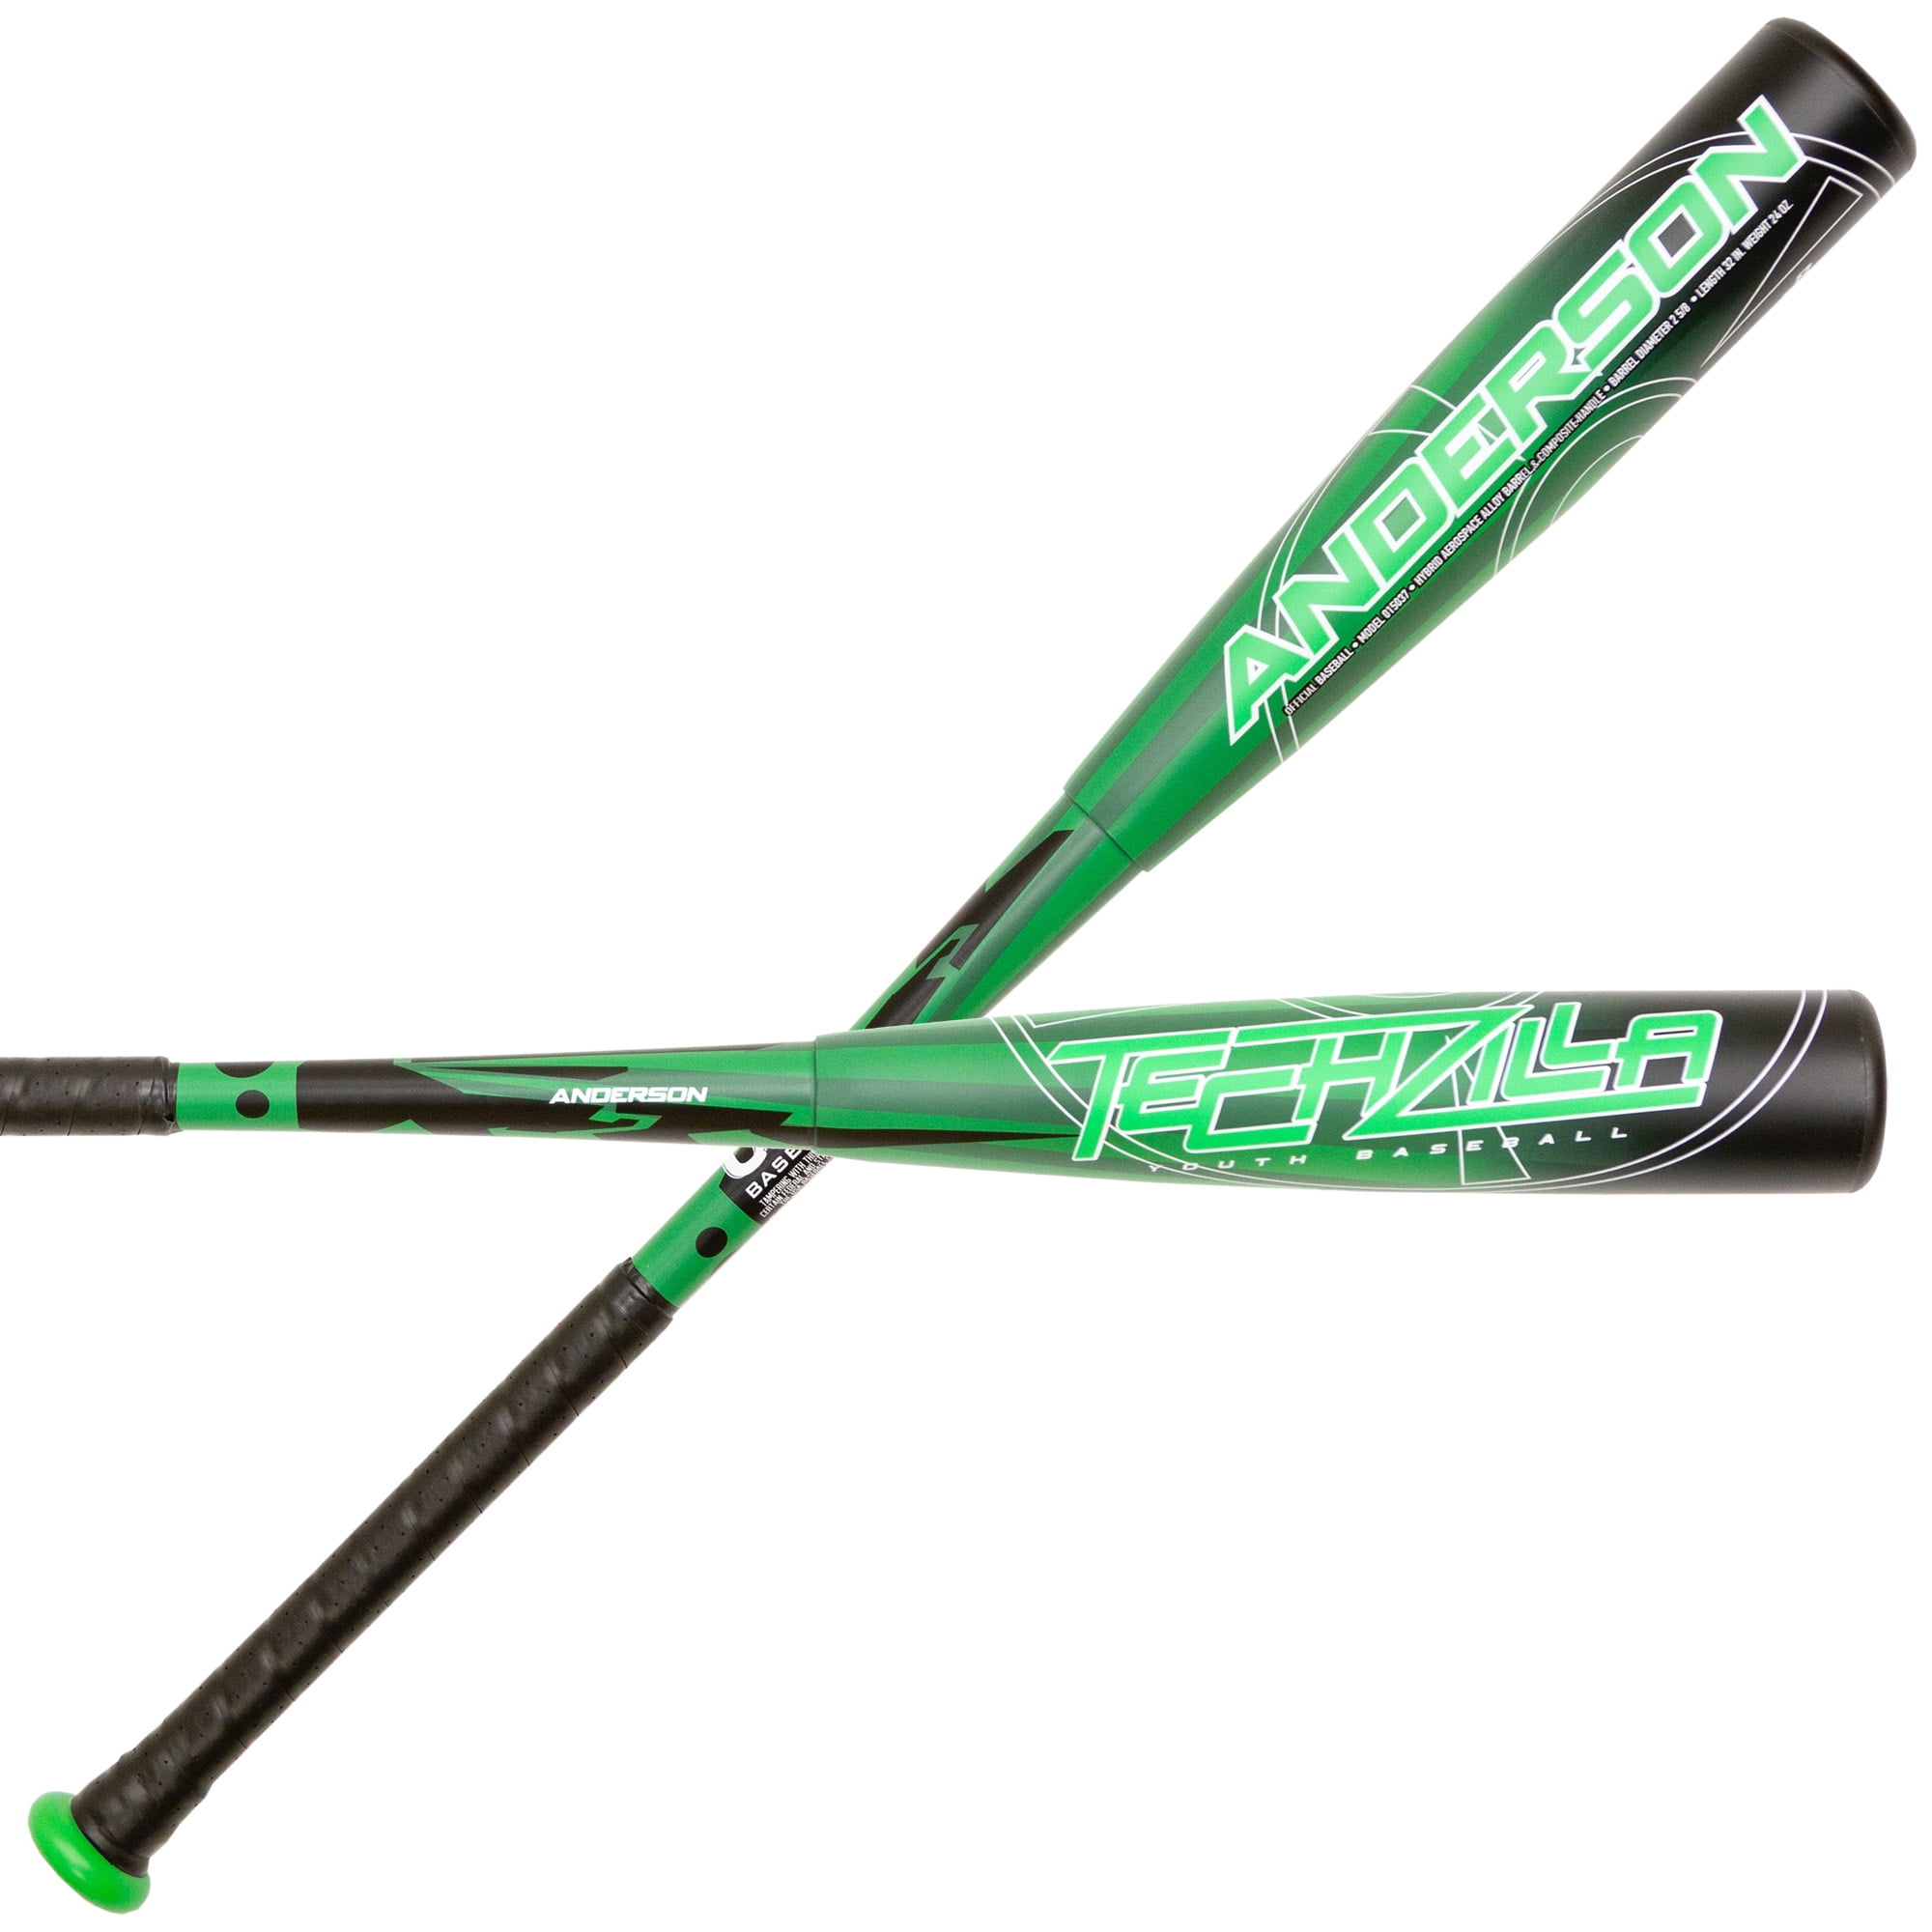 Durable Lightweight Design 2 5/8 in Barrel 30" Youth Hybrid Baseball Bats